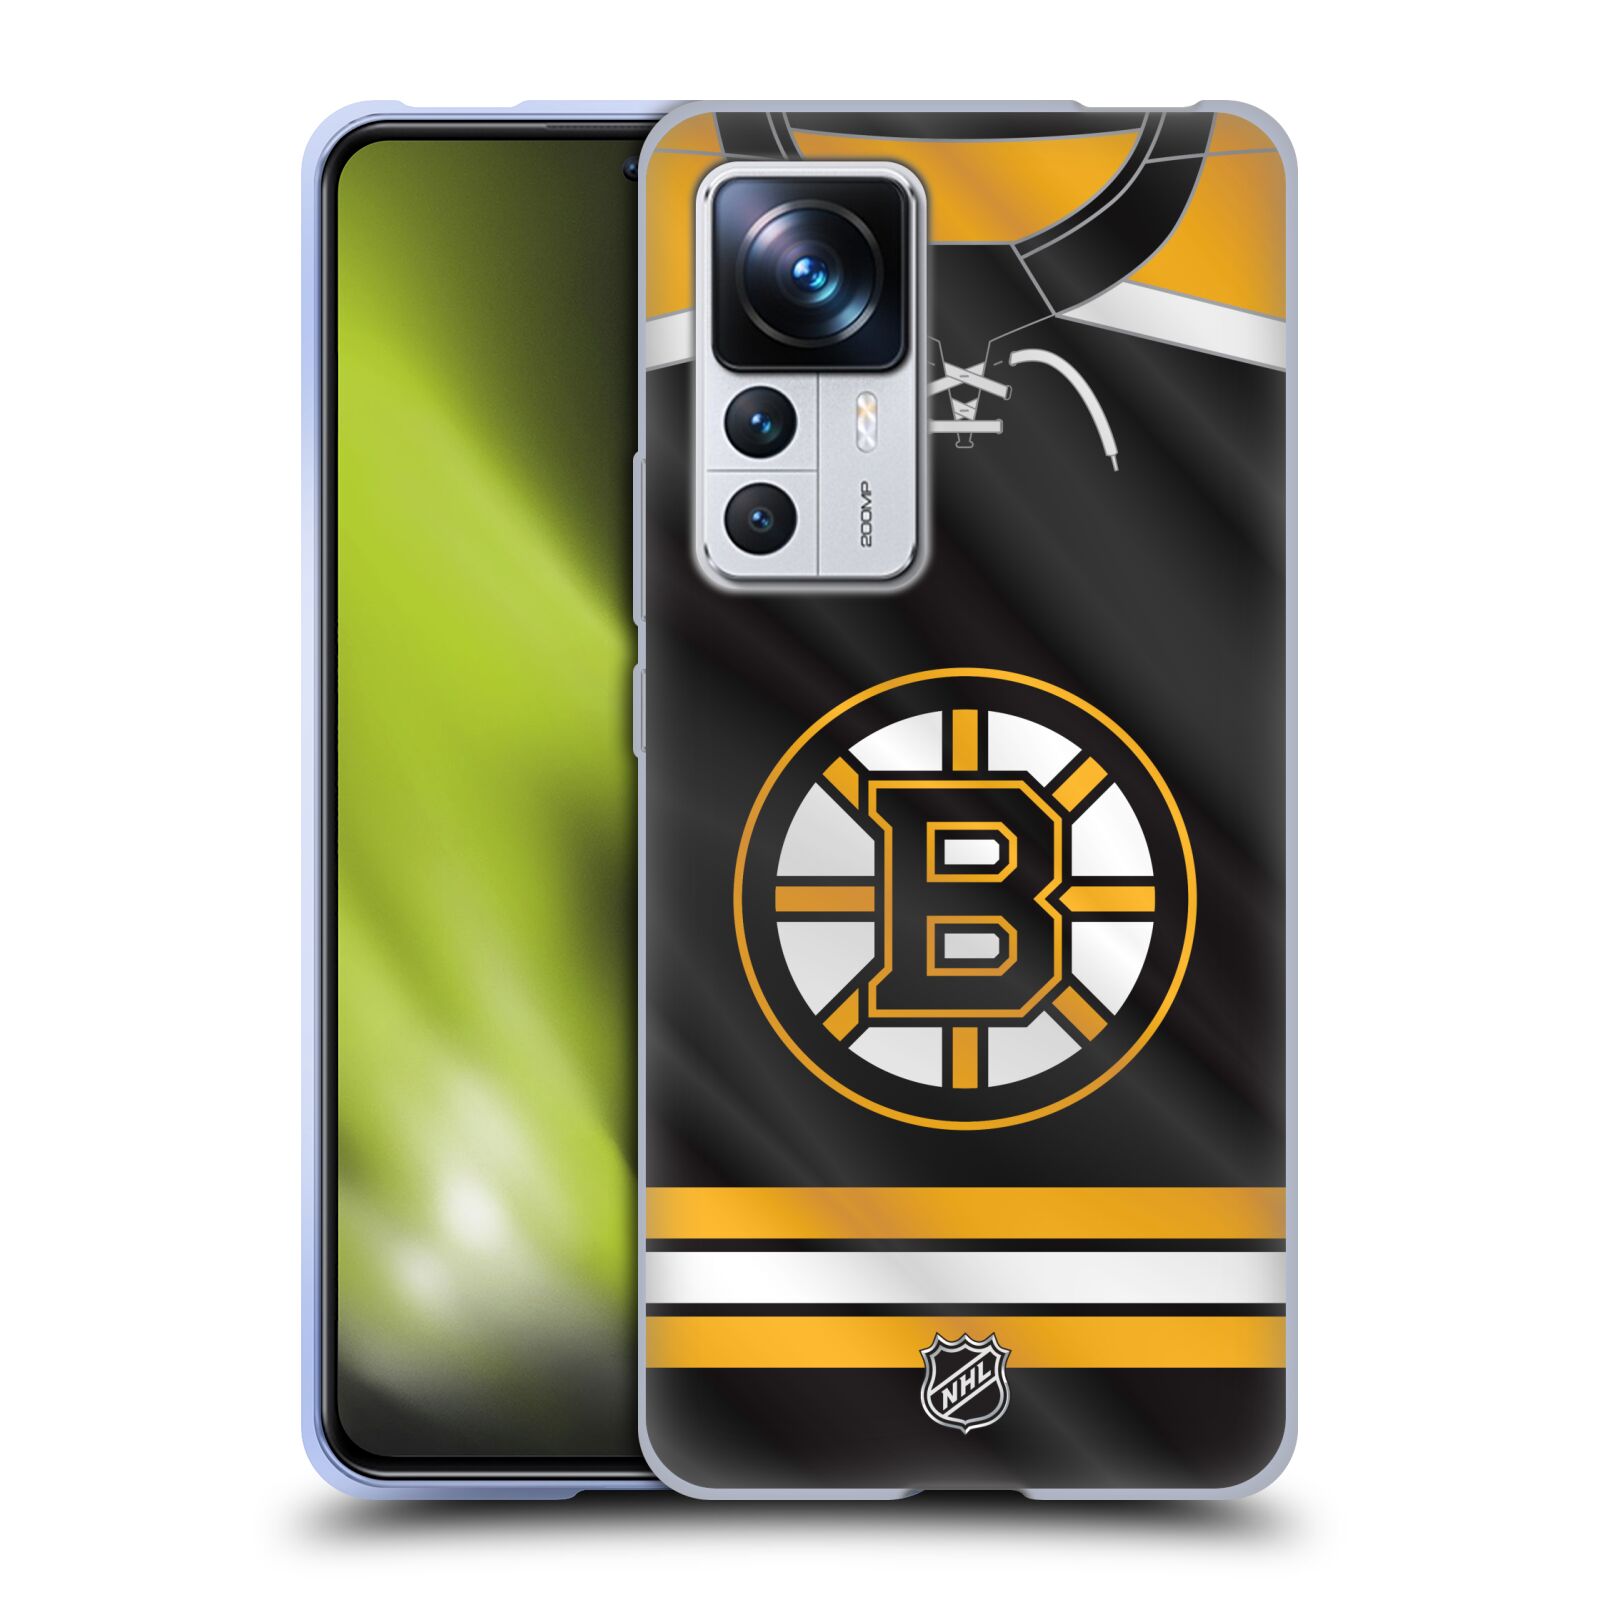 Silikonové pouzdro na mobil Xiaomi 12T / 12T Pro - NHL - Dres Boston Bruins (Silikonový kryt, obal, pouzdro na mobilní telefon Xiaomi 12T / 12T Pro s licencovaným motivem NHL - Dres Boston Bruins)